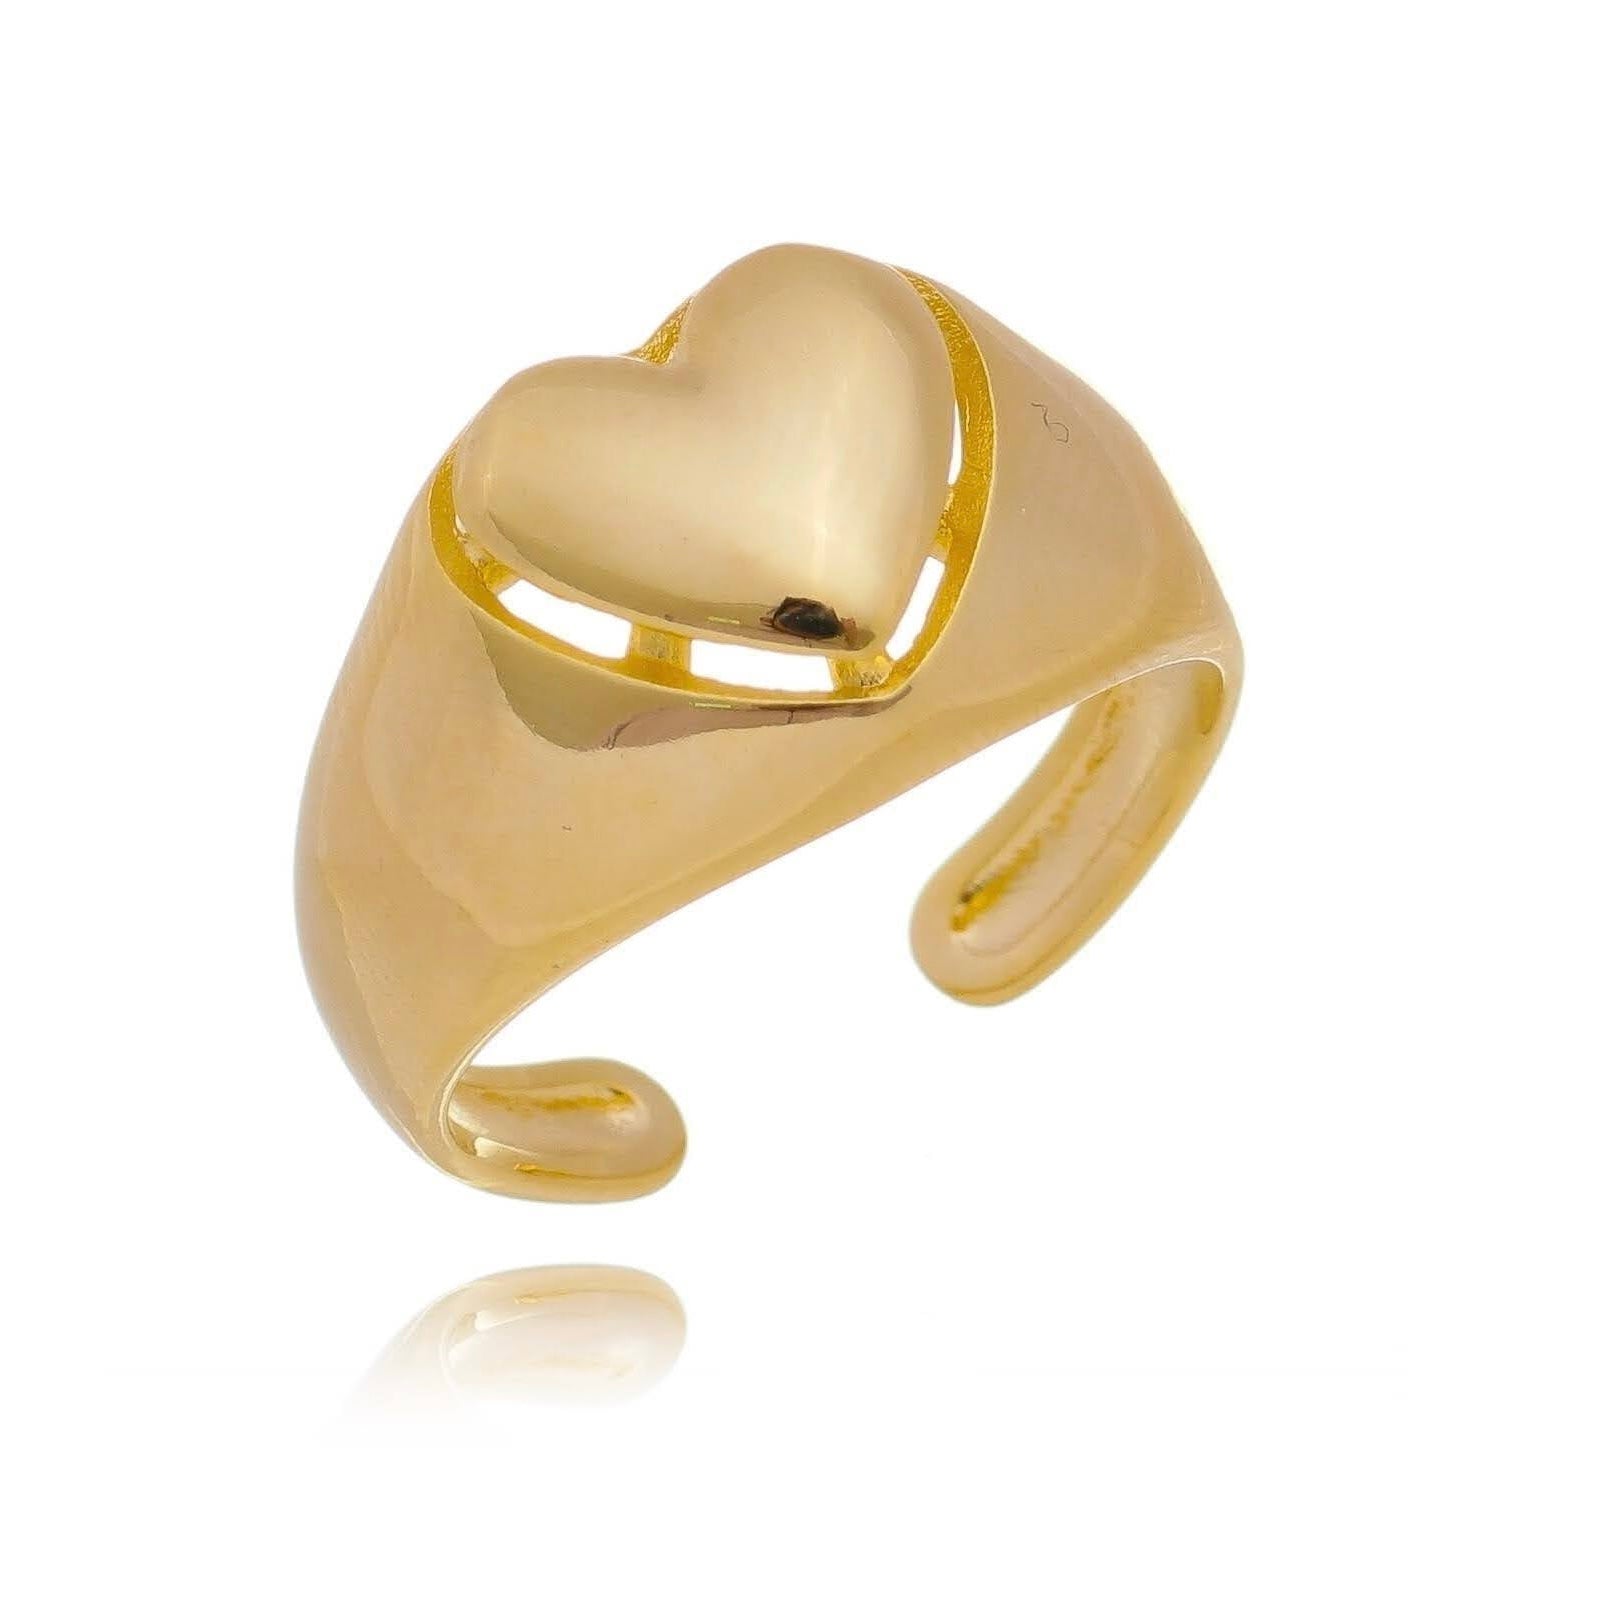 GoldFi 18k Gold Filled Pillow Heart Ring